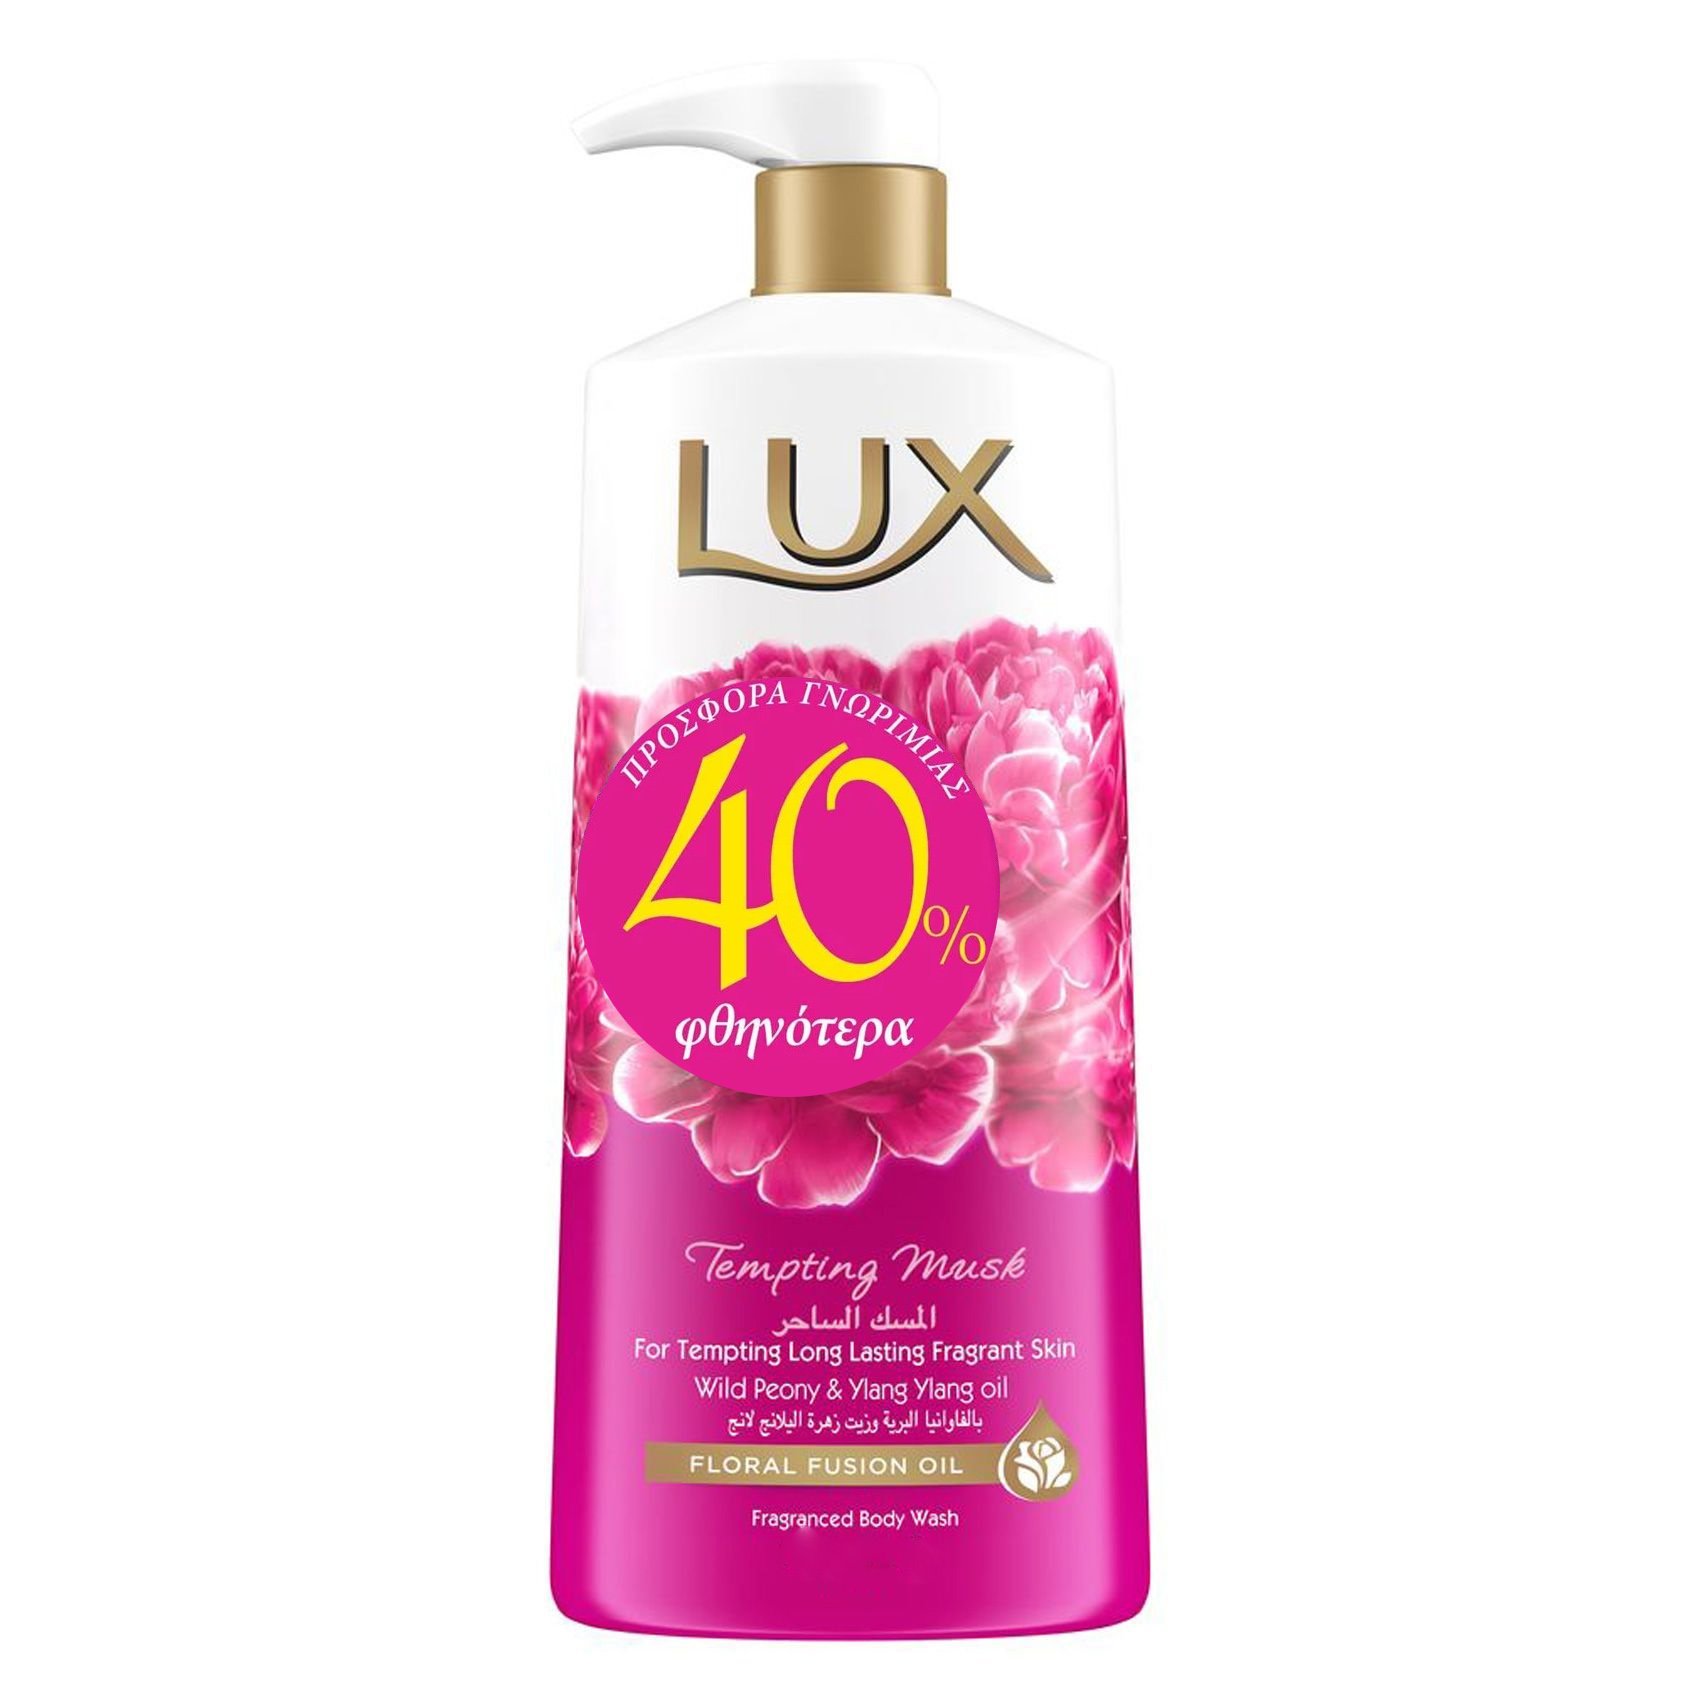 Lux Tempting Musk Body Wash With Floral Fusion Oil Αφρόλουτρο με Αιθέρια Έλαιο Λουλουδιών 600ml -40% Promo